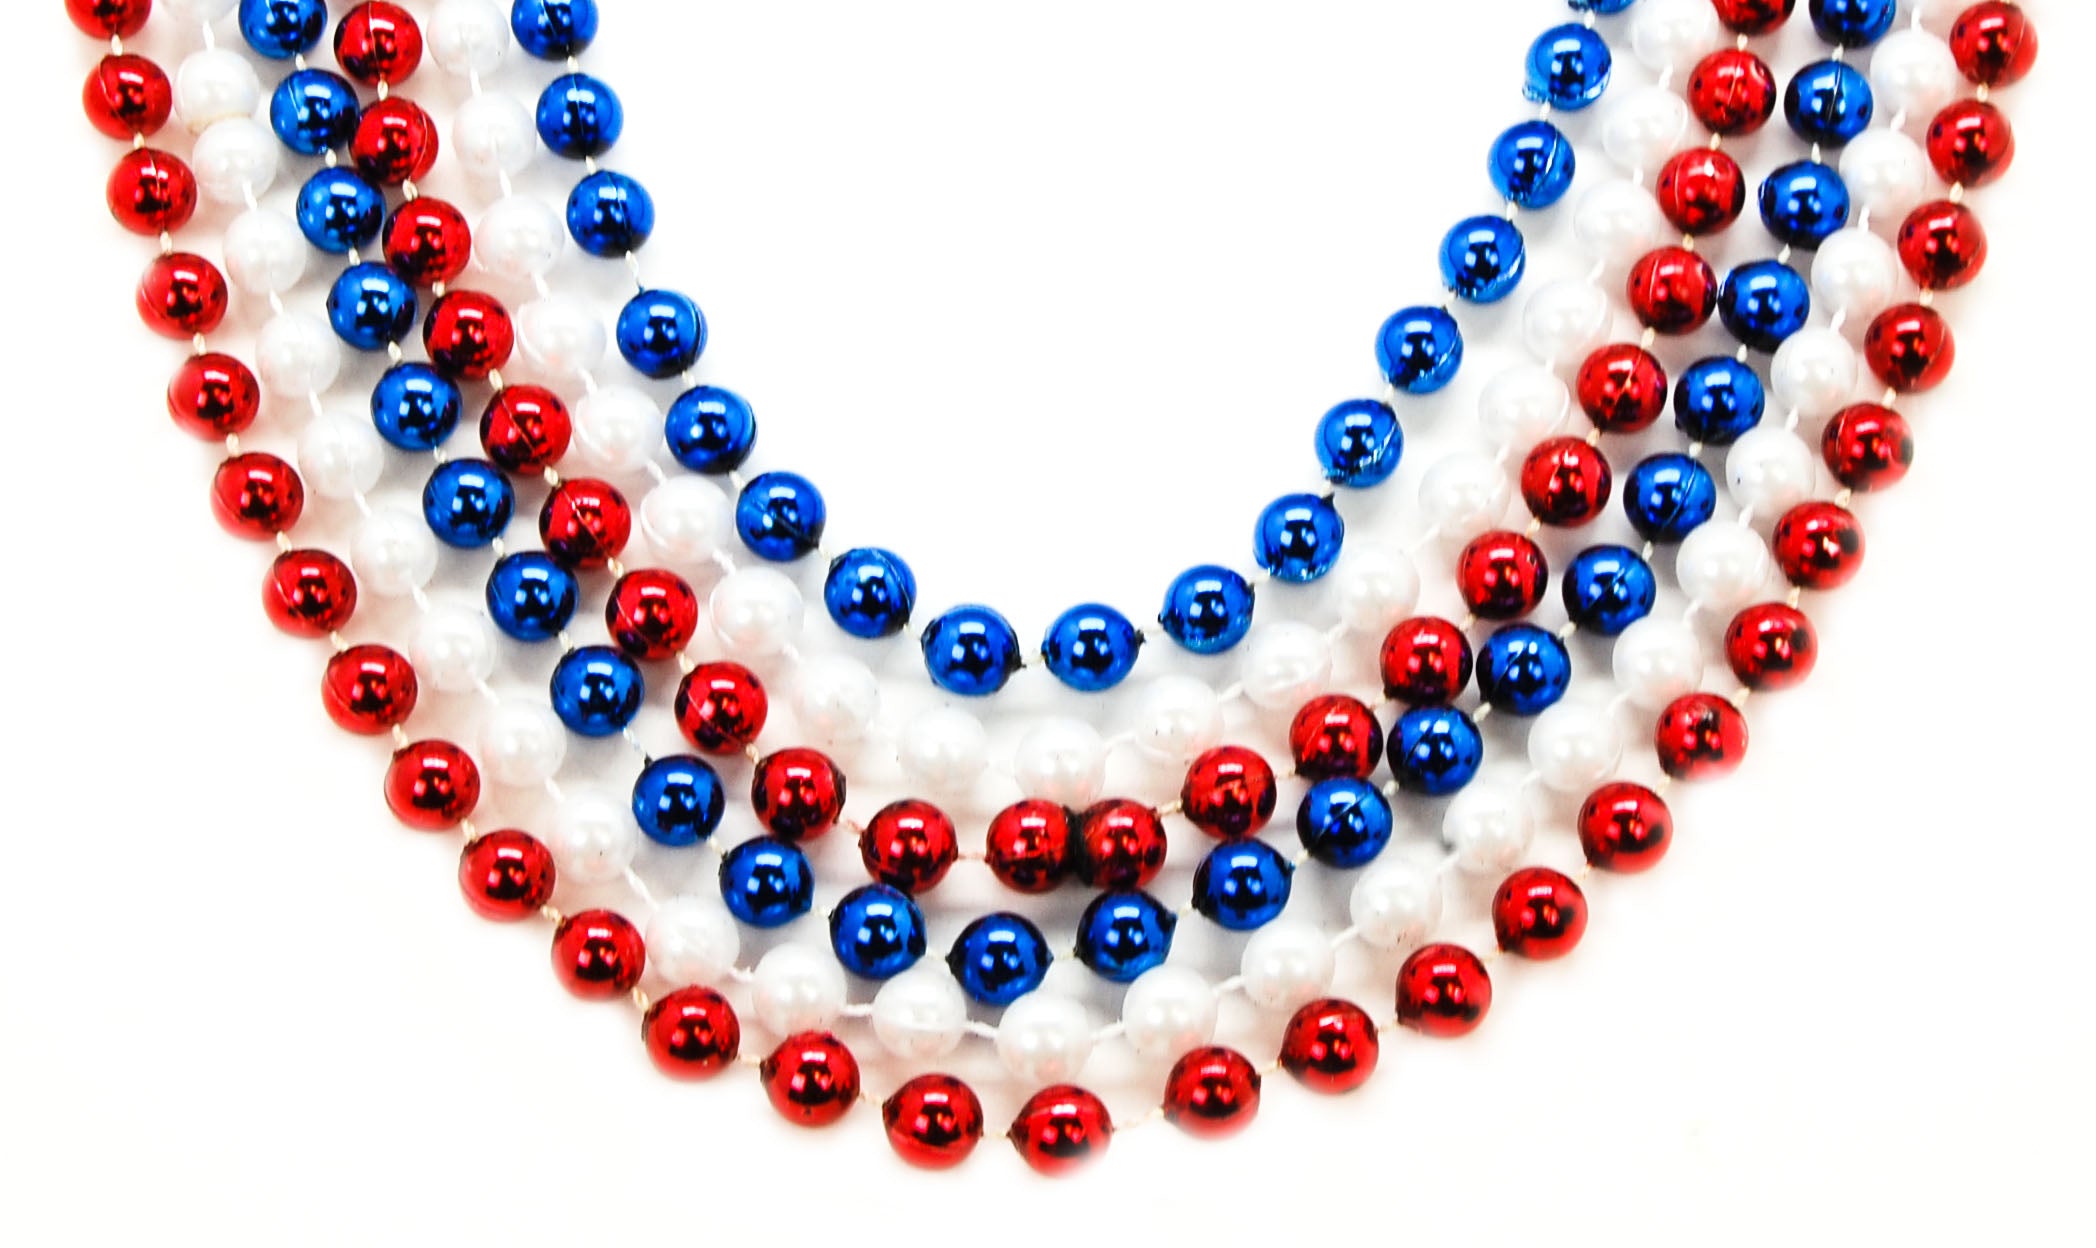 48 10mm Round Beads Red, White & Blue